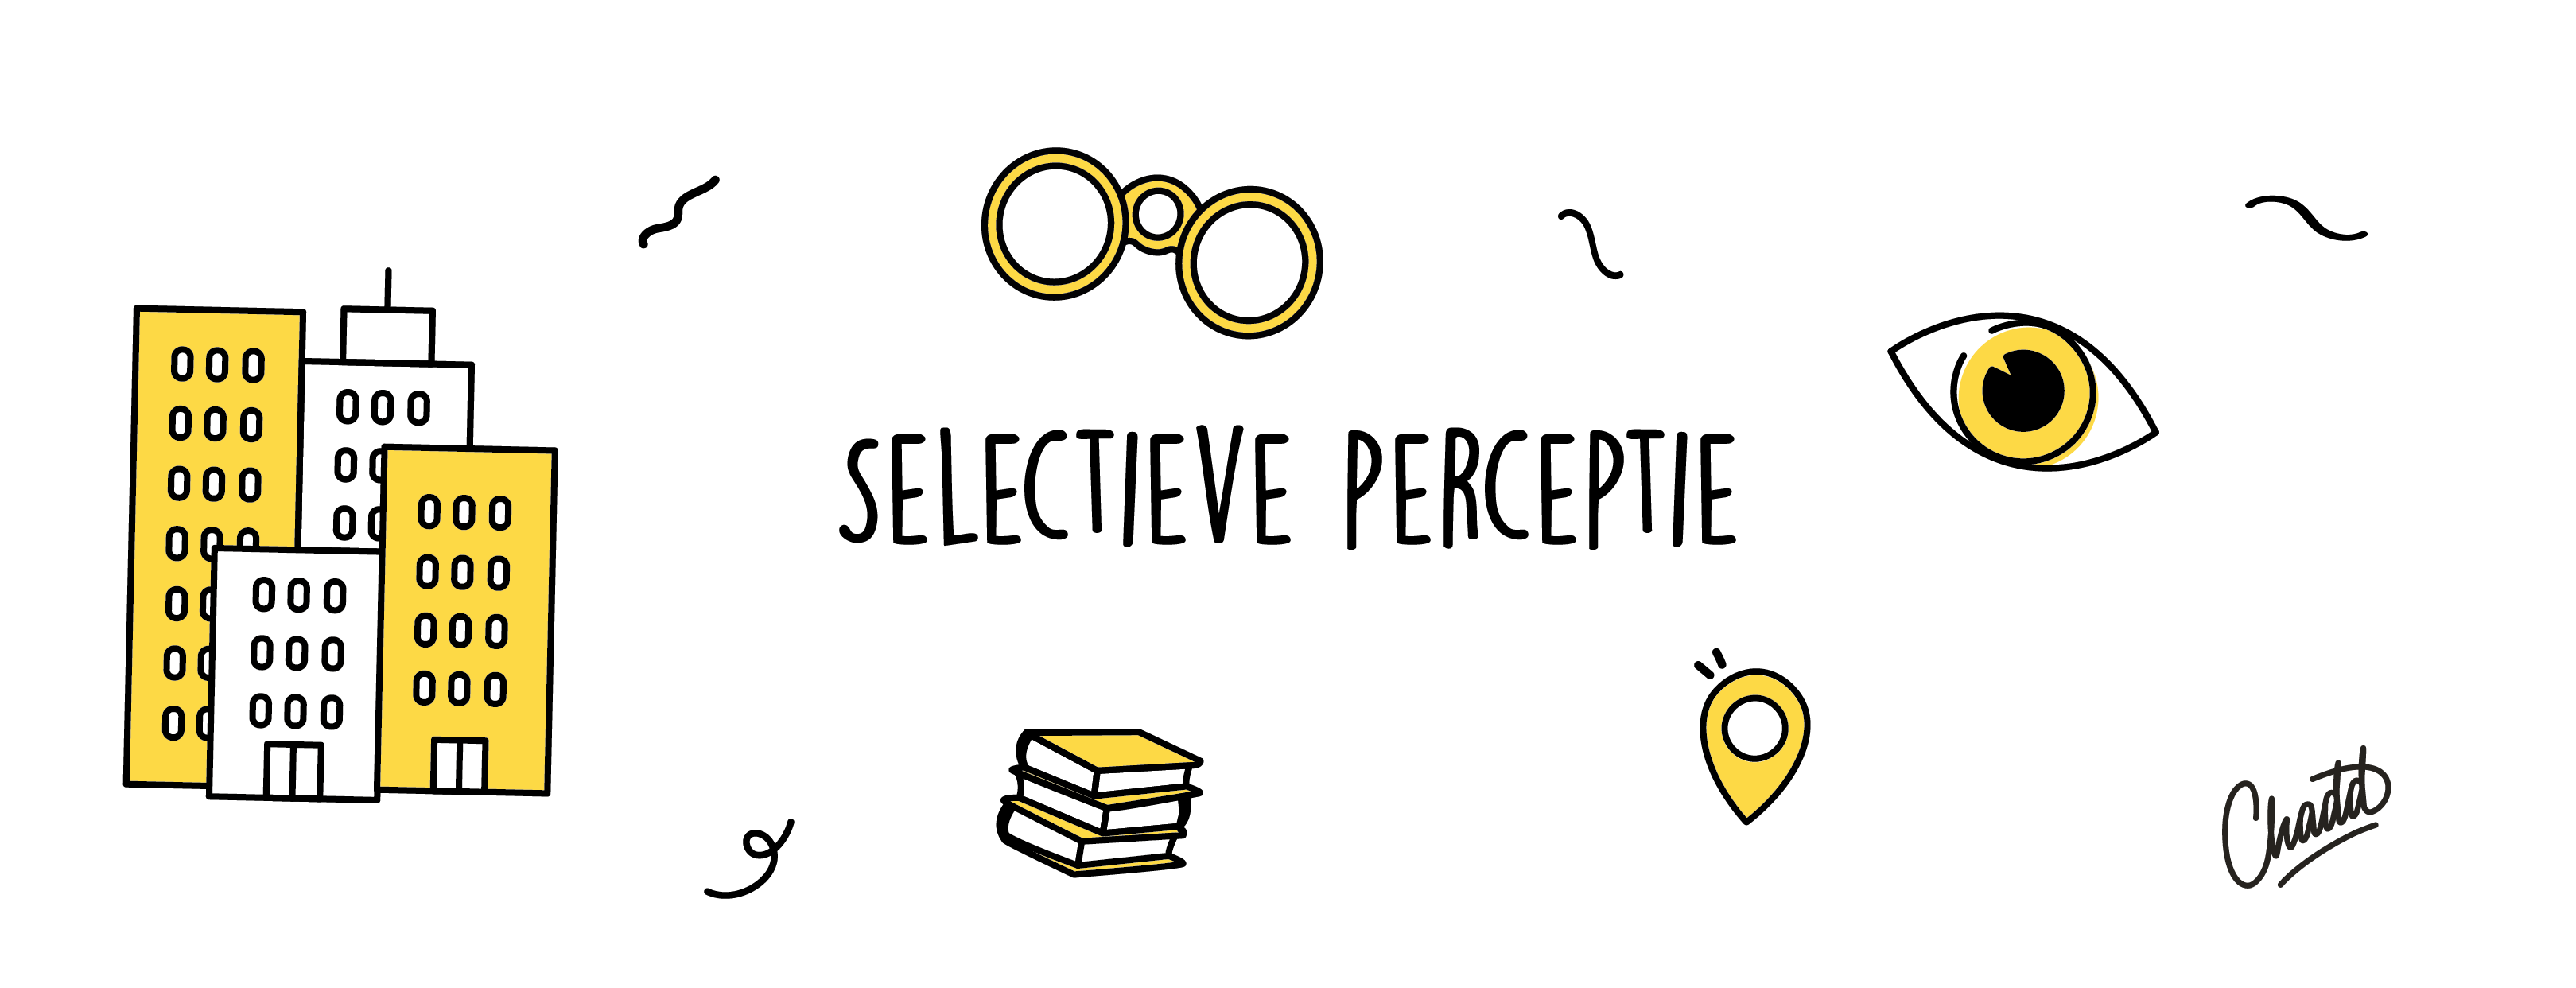 selectieve perceptie